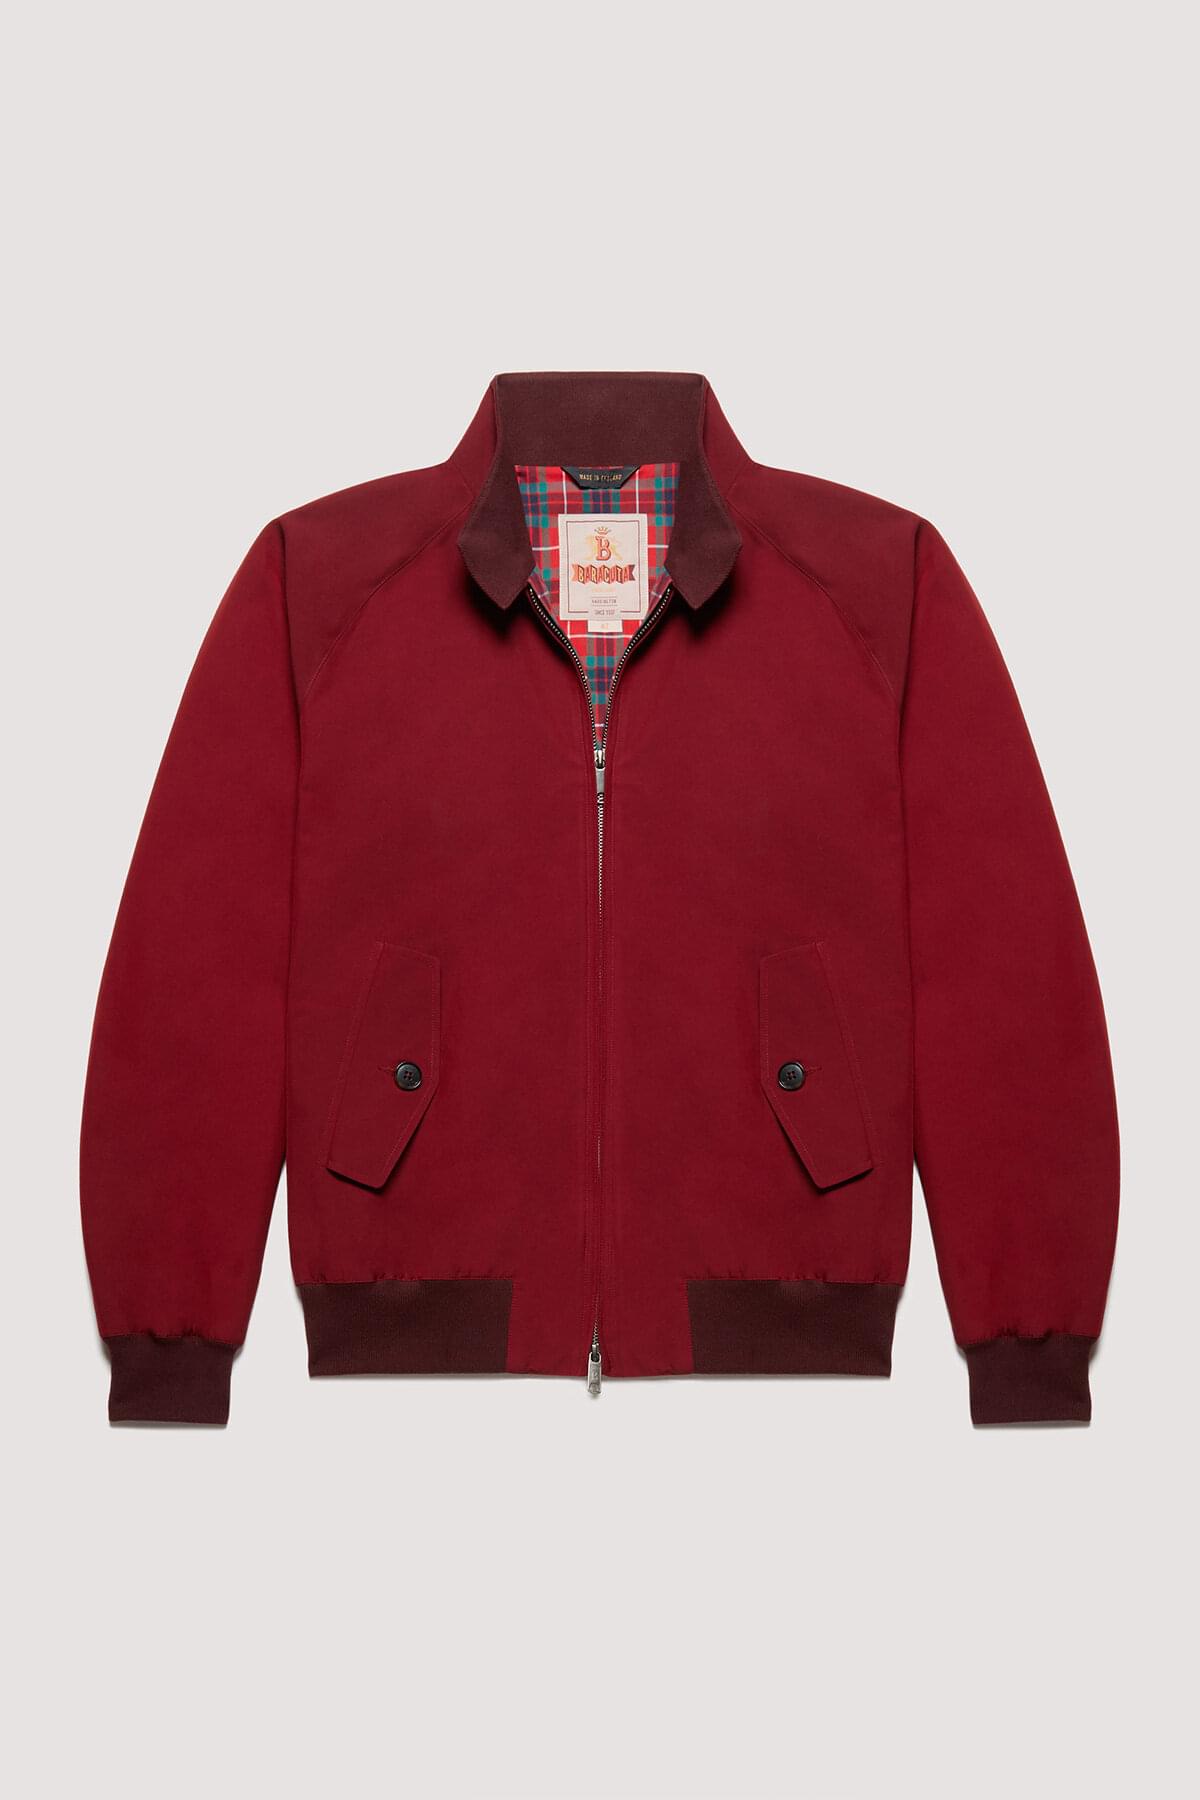 BARACUTA G9 Cotton-Blend Harrington Jacket for Men